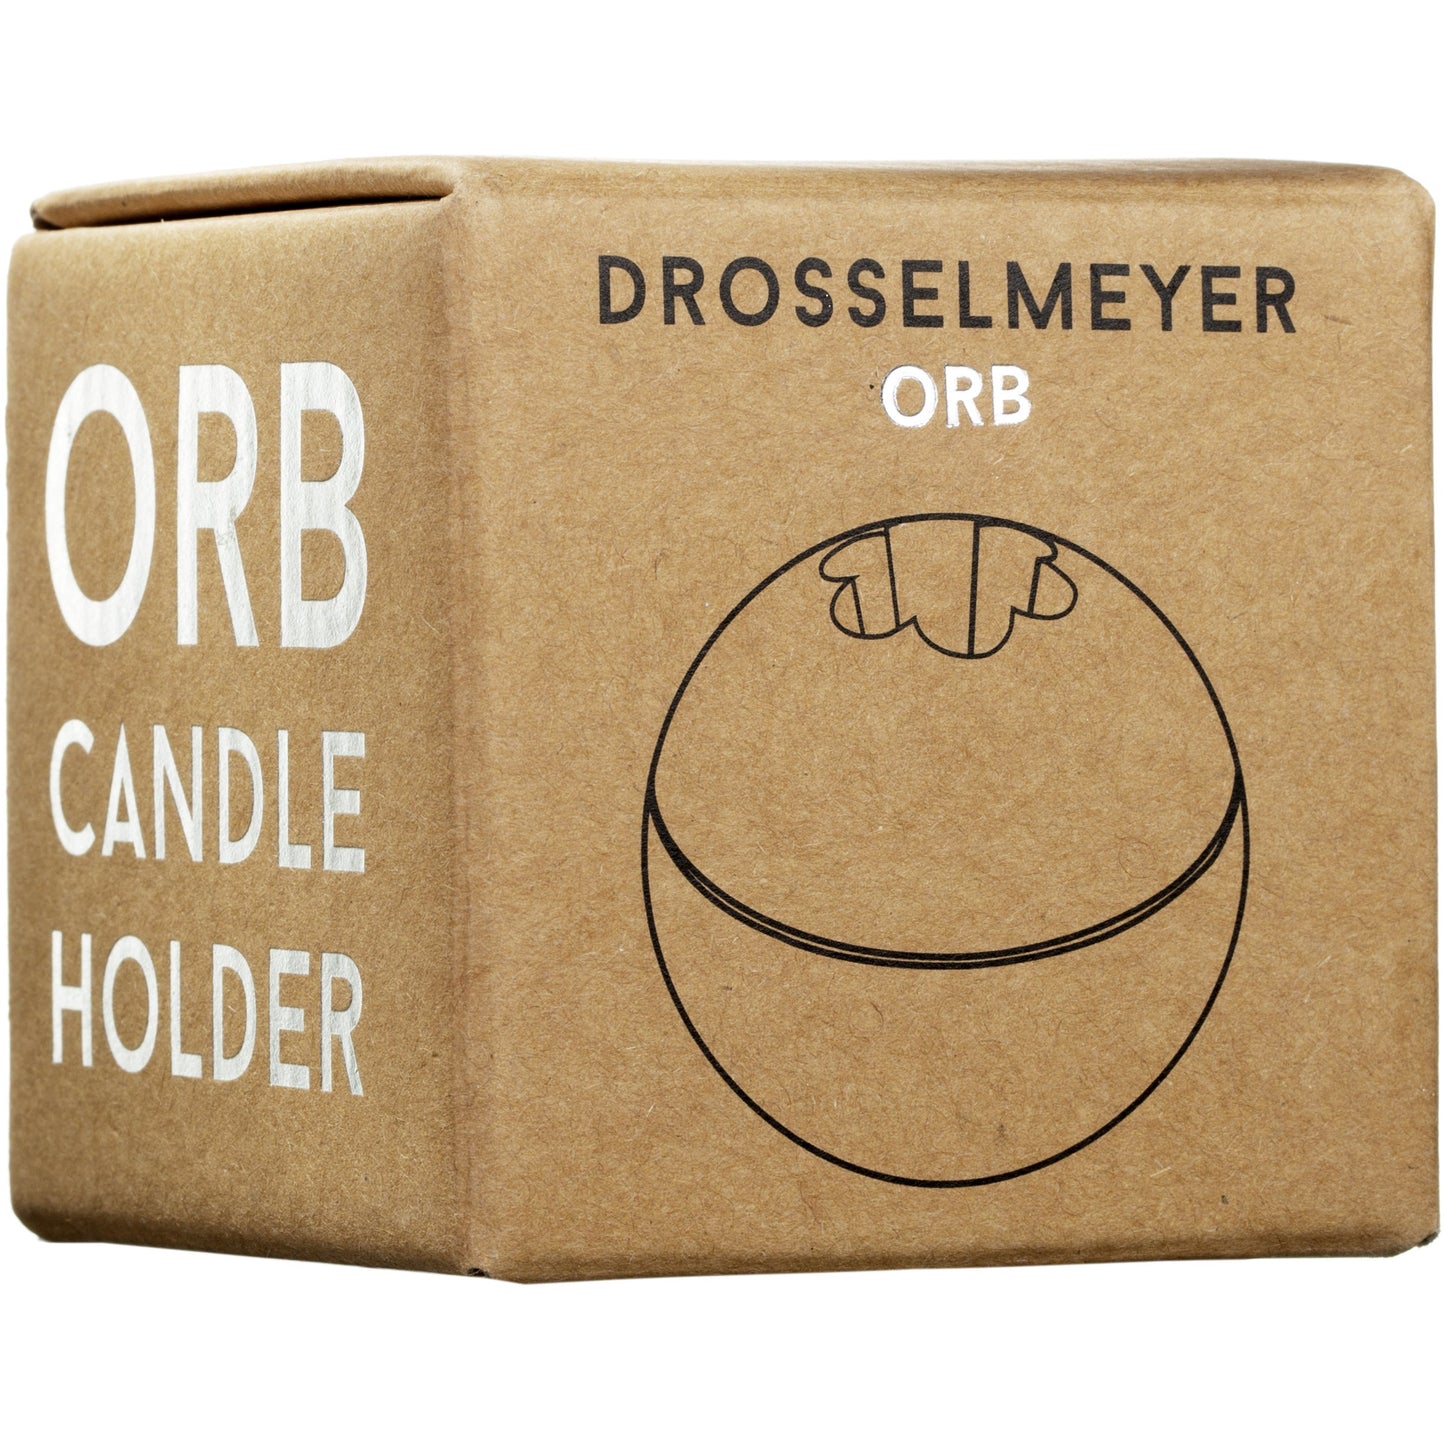 Drosselmeyer Orb Candle Holder Cast Iron